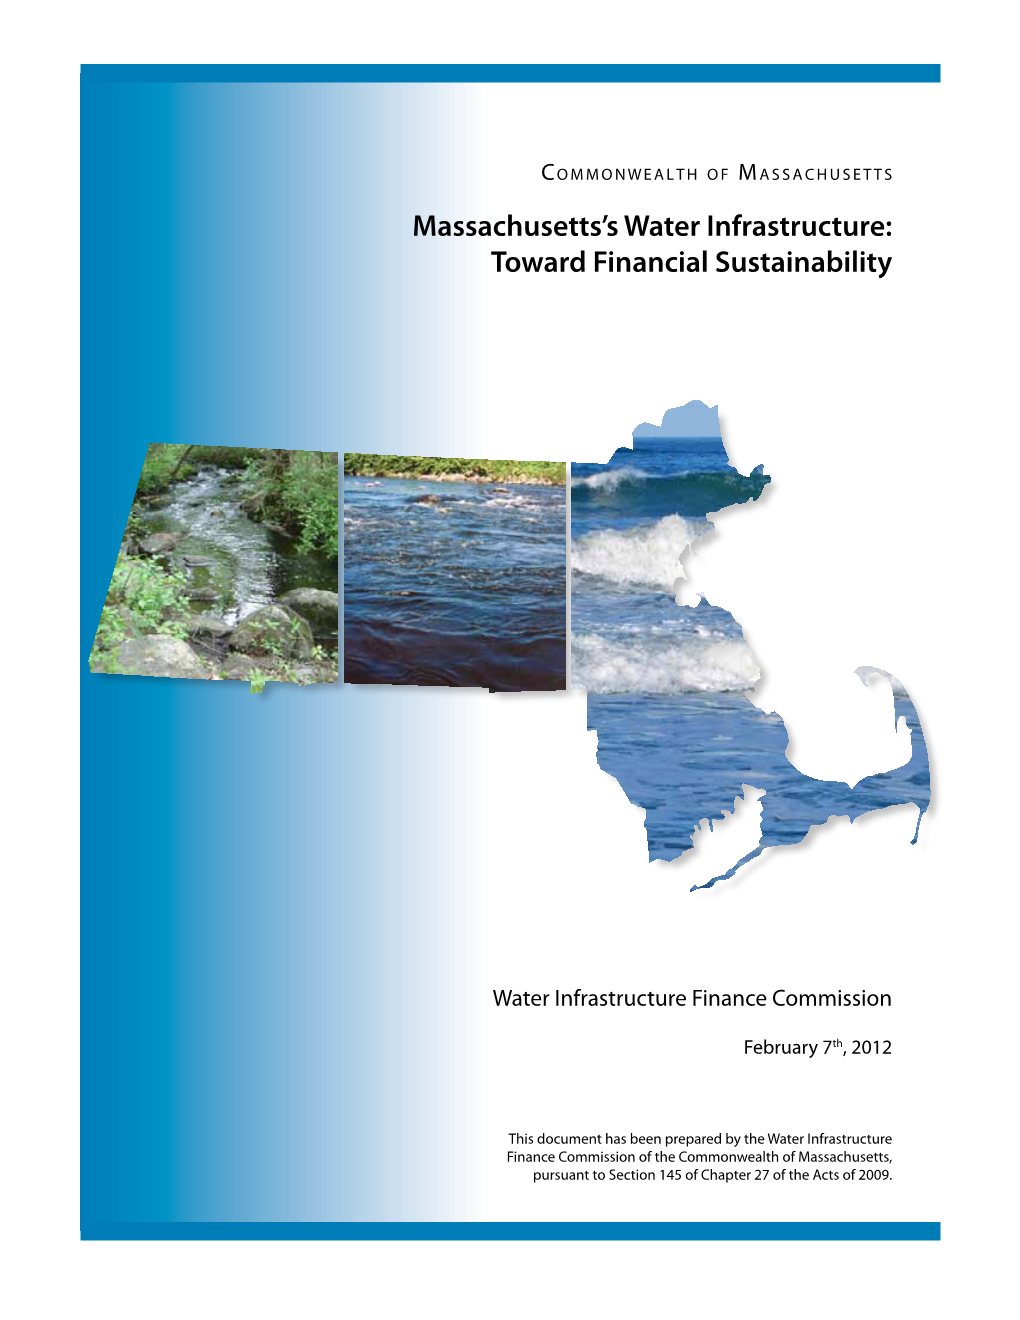 Massachusetts's Water Infrastructure: Toward Financial Sustainability